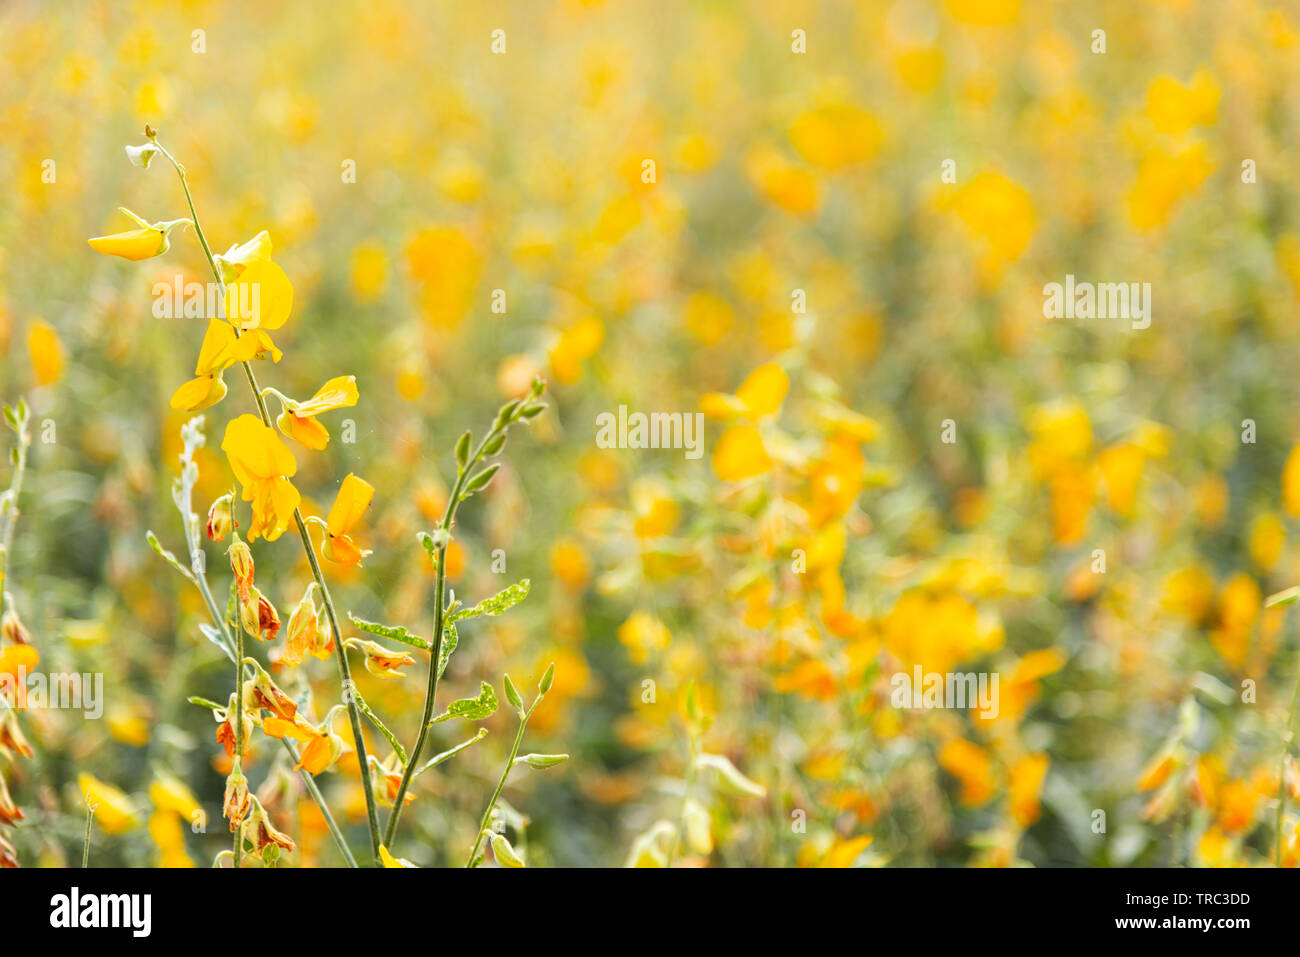 Yellow Sunn hemp flower in sunny day with selective focus Stock Photo